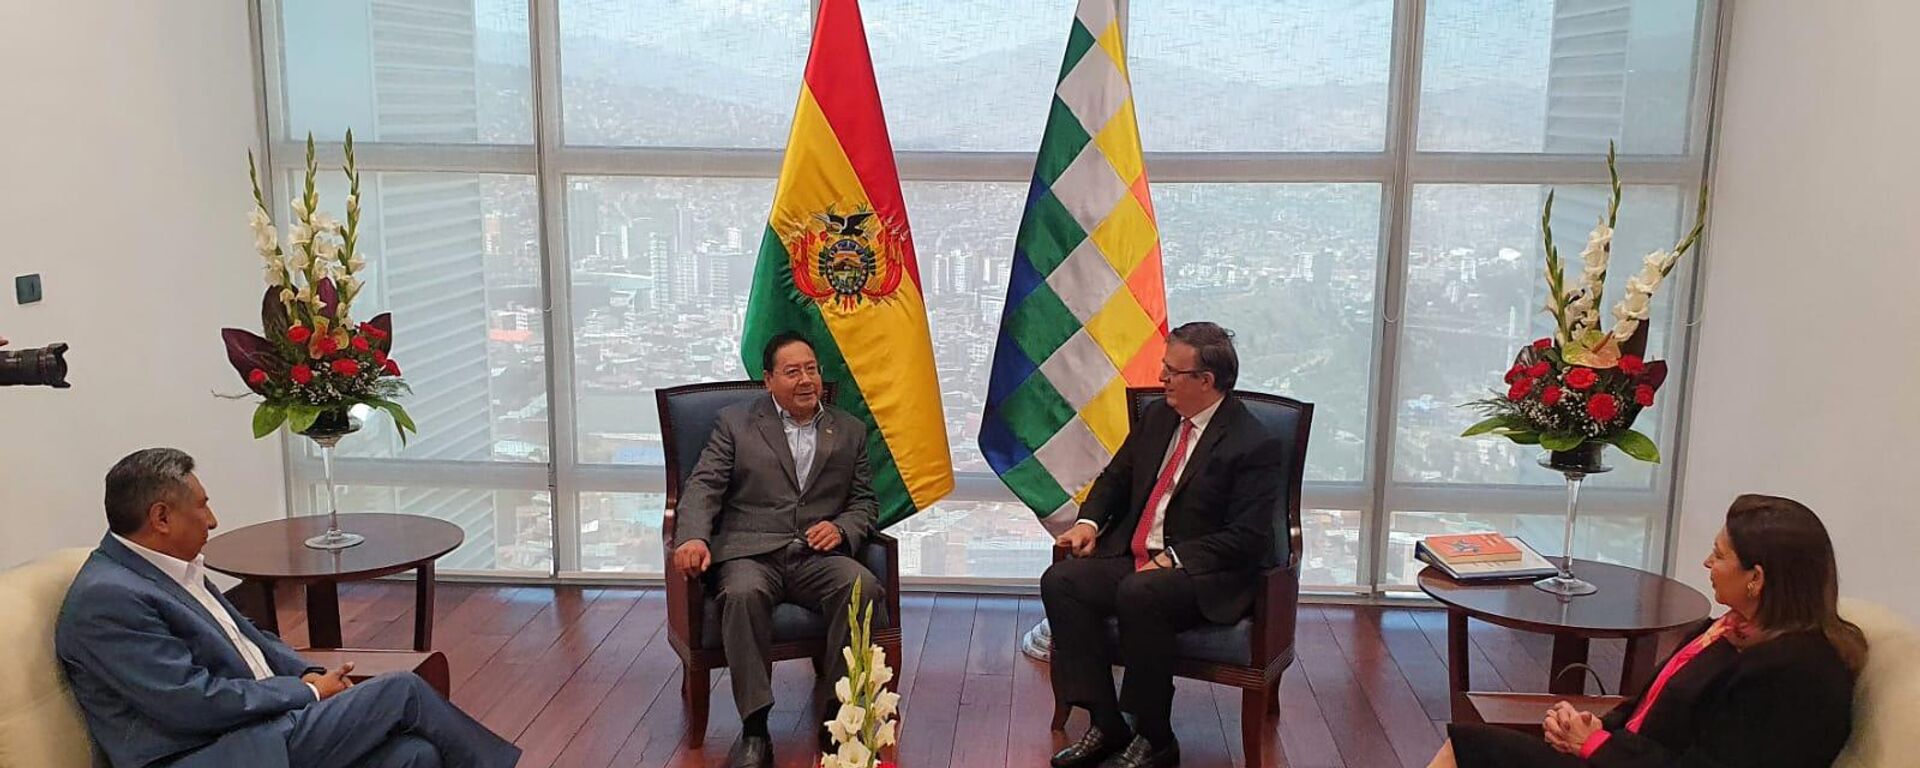 El presidente de Bolivia, Luis Arce, recibe al canciller de México, Marcelo Ebrard. - Sputnik Mundo, 1920, 04.08.2022